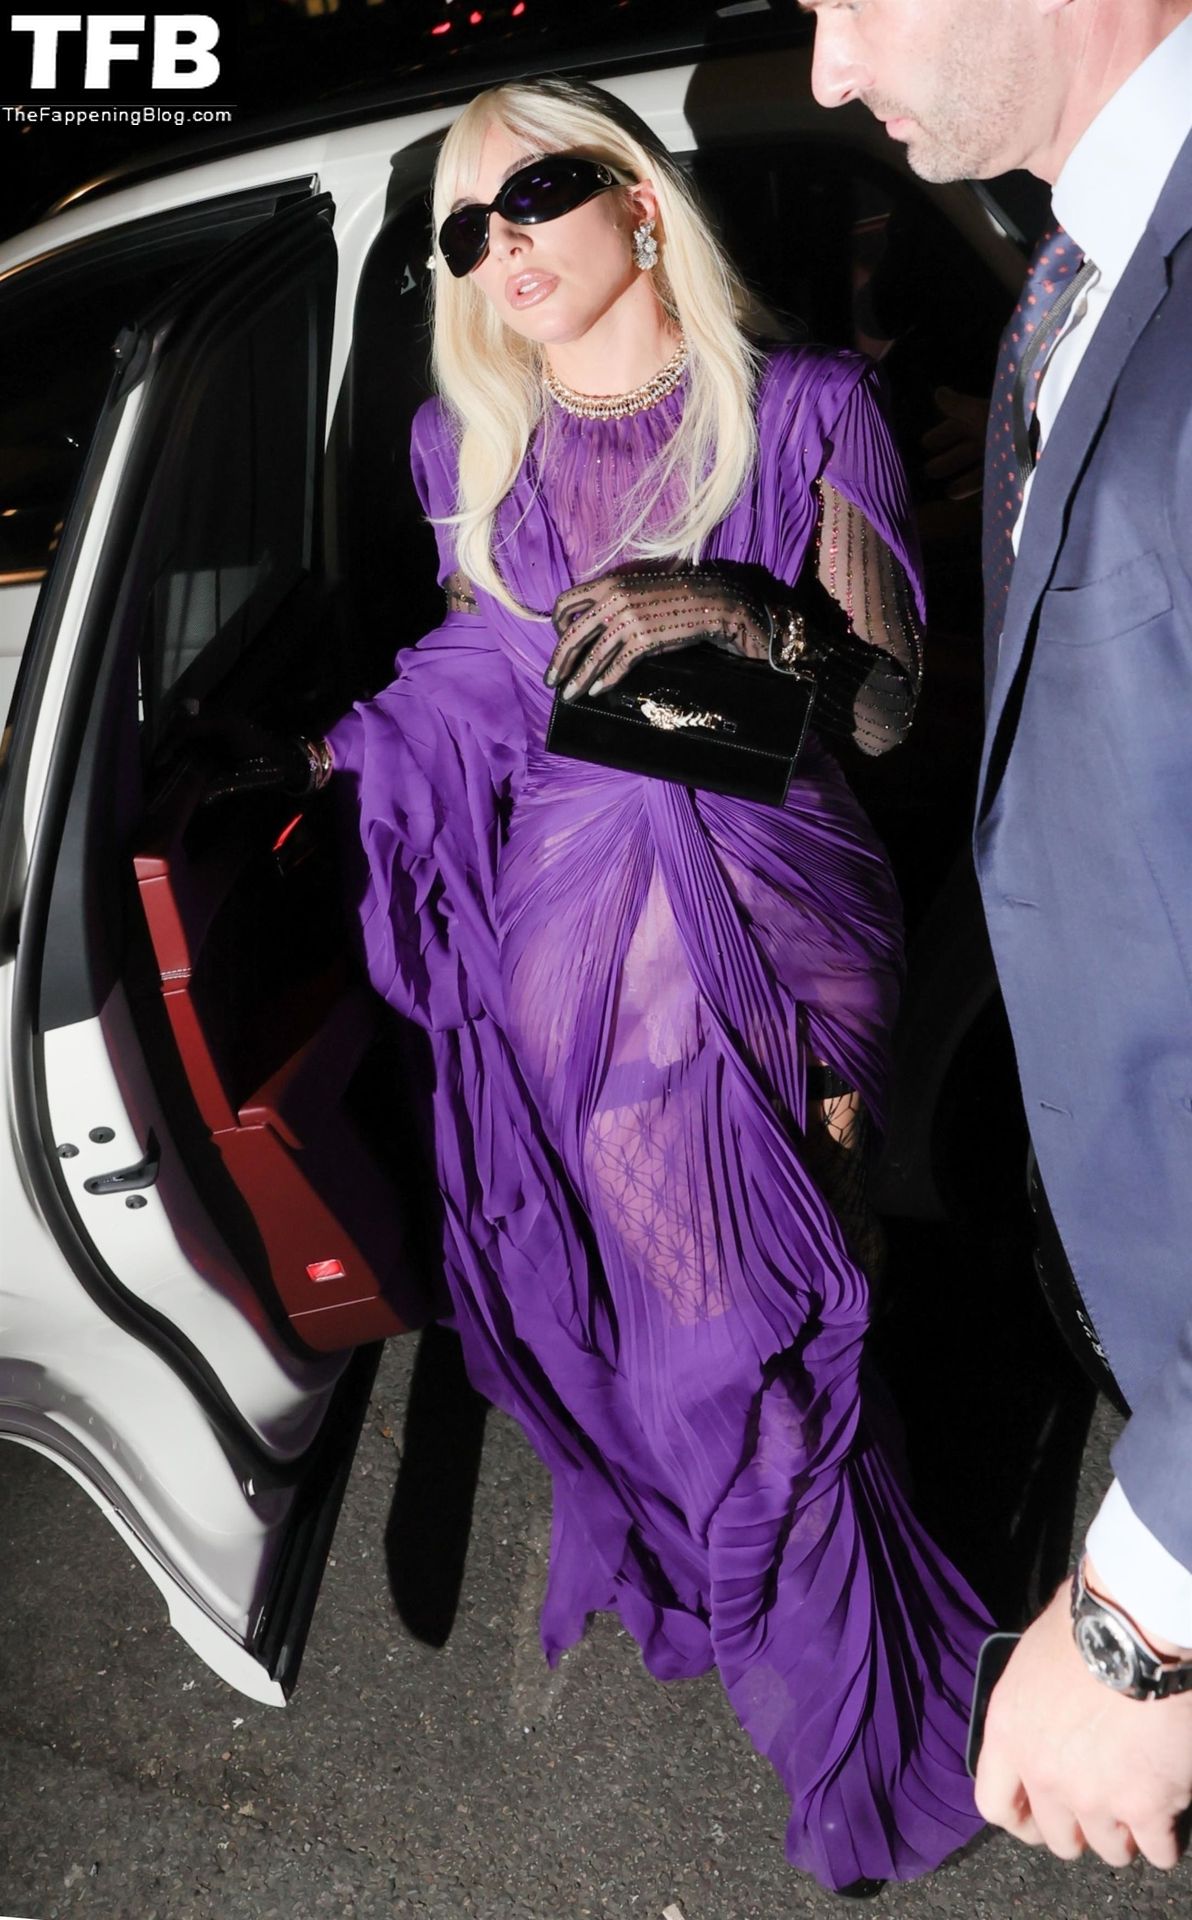 Lady-Gaga-Sexy-The-Fappening-Blog-19.jpg